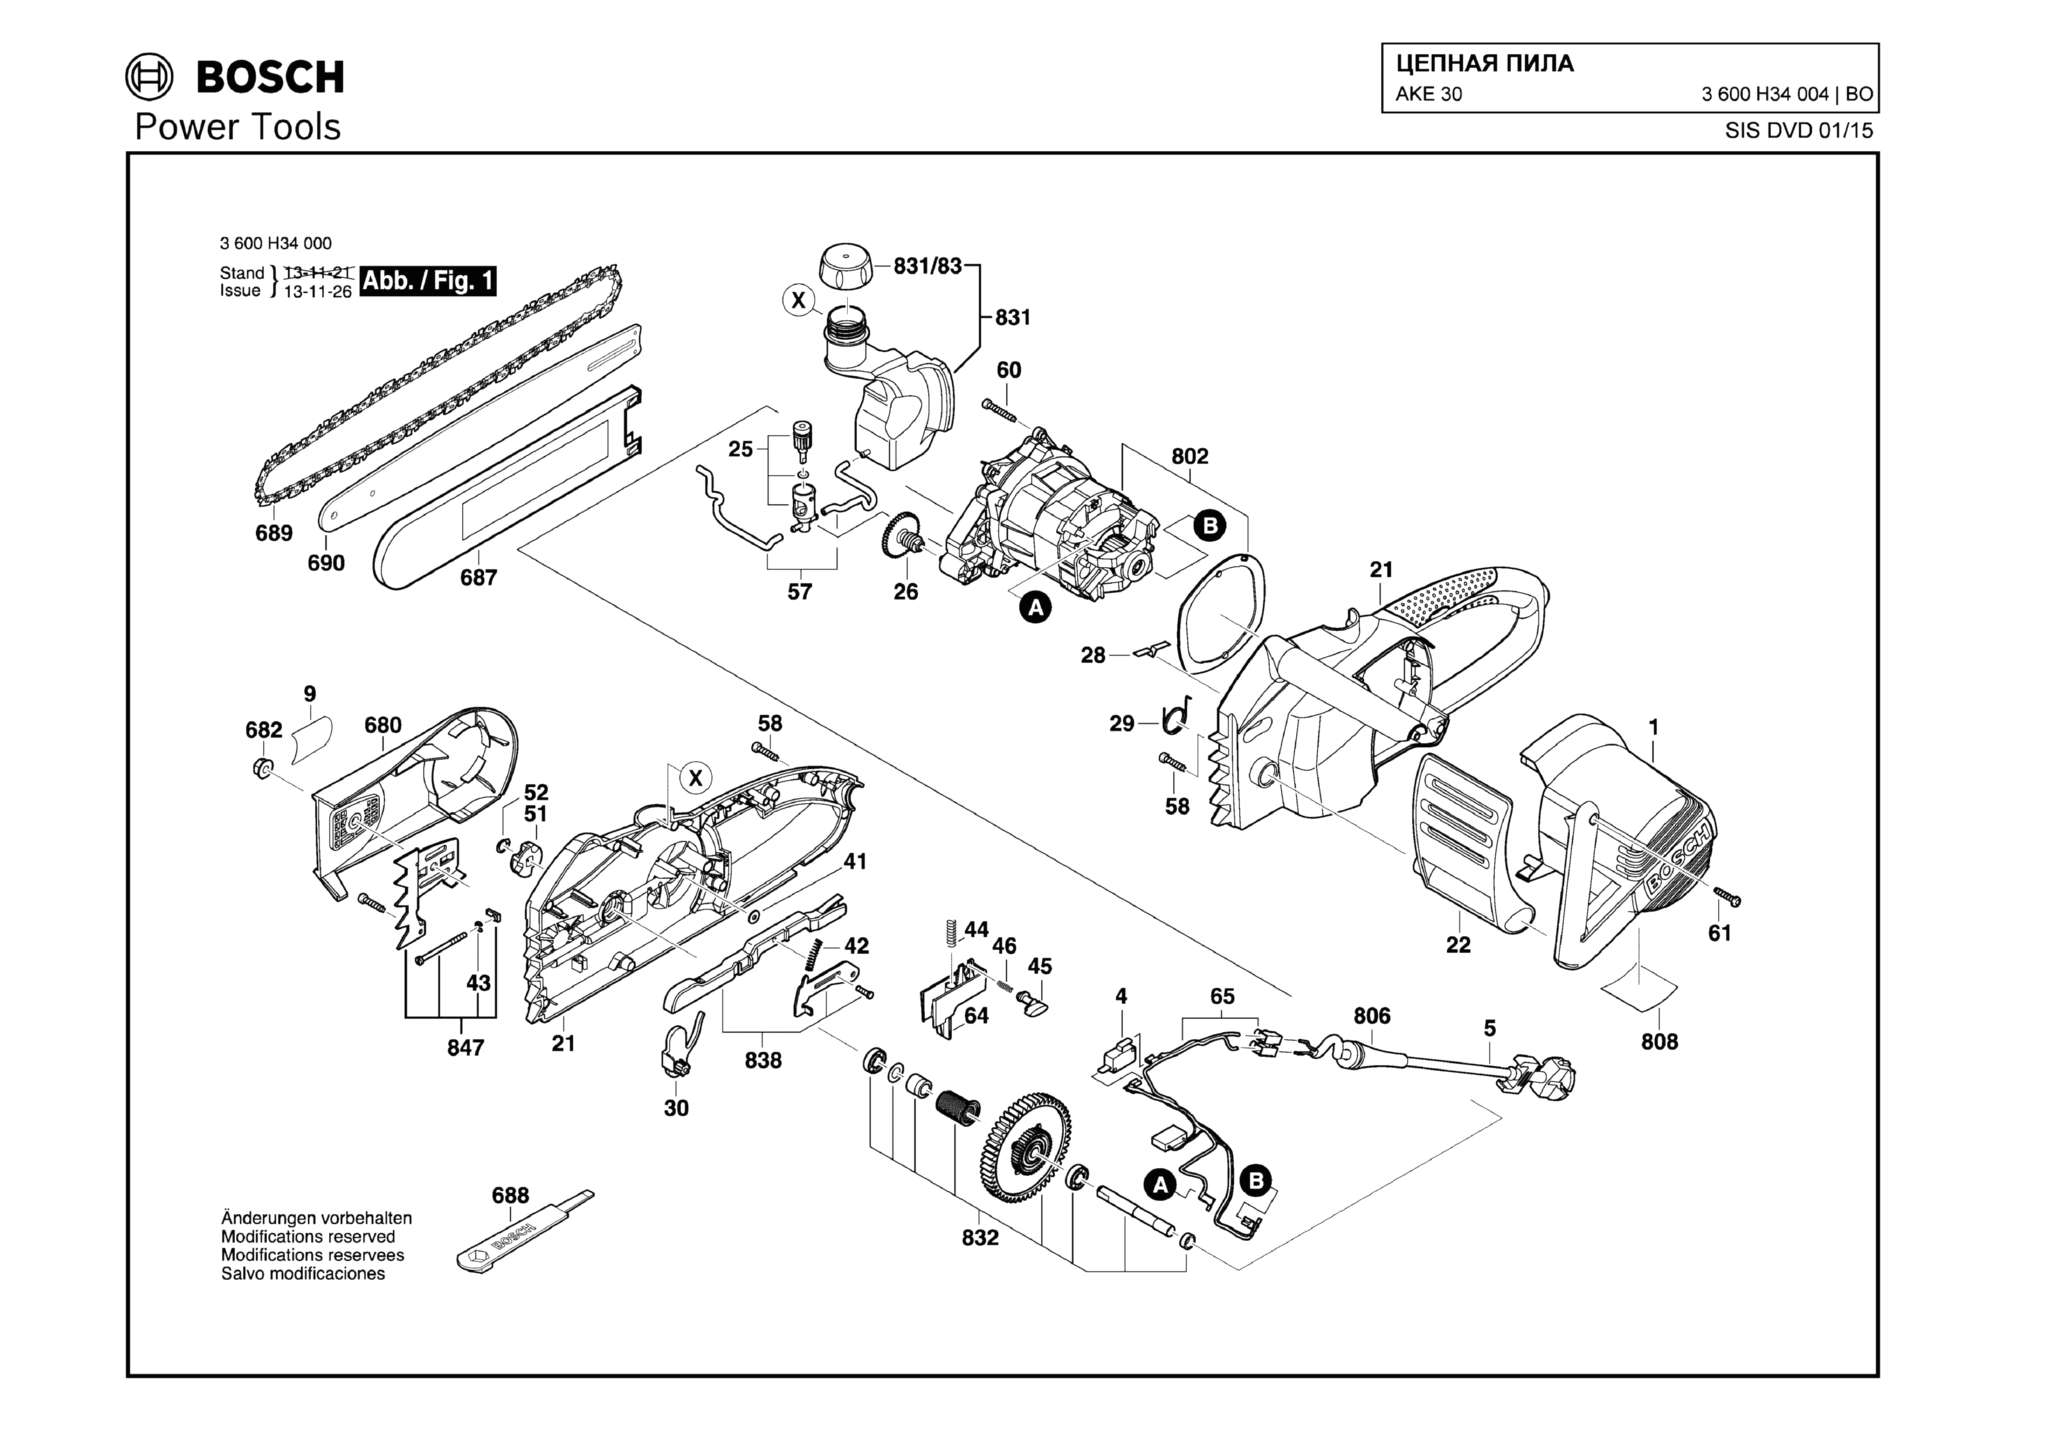 Запчасти, схема и деталировка Bosch AKE 30 (ТИП 3600H34004)